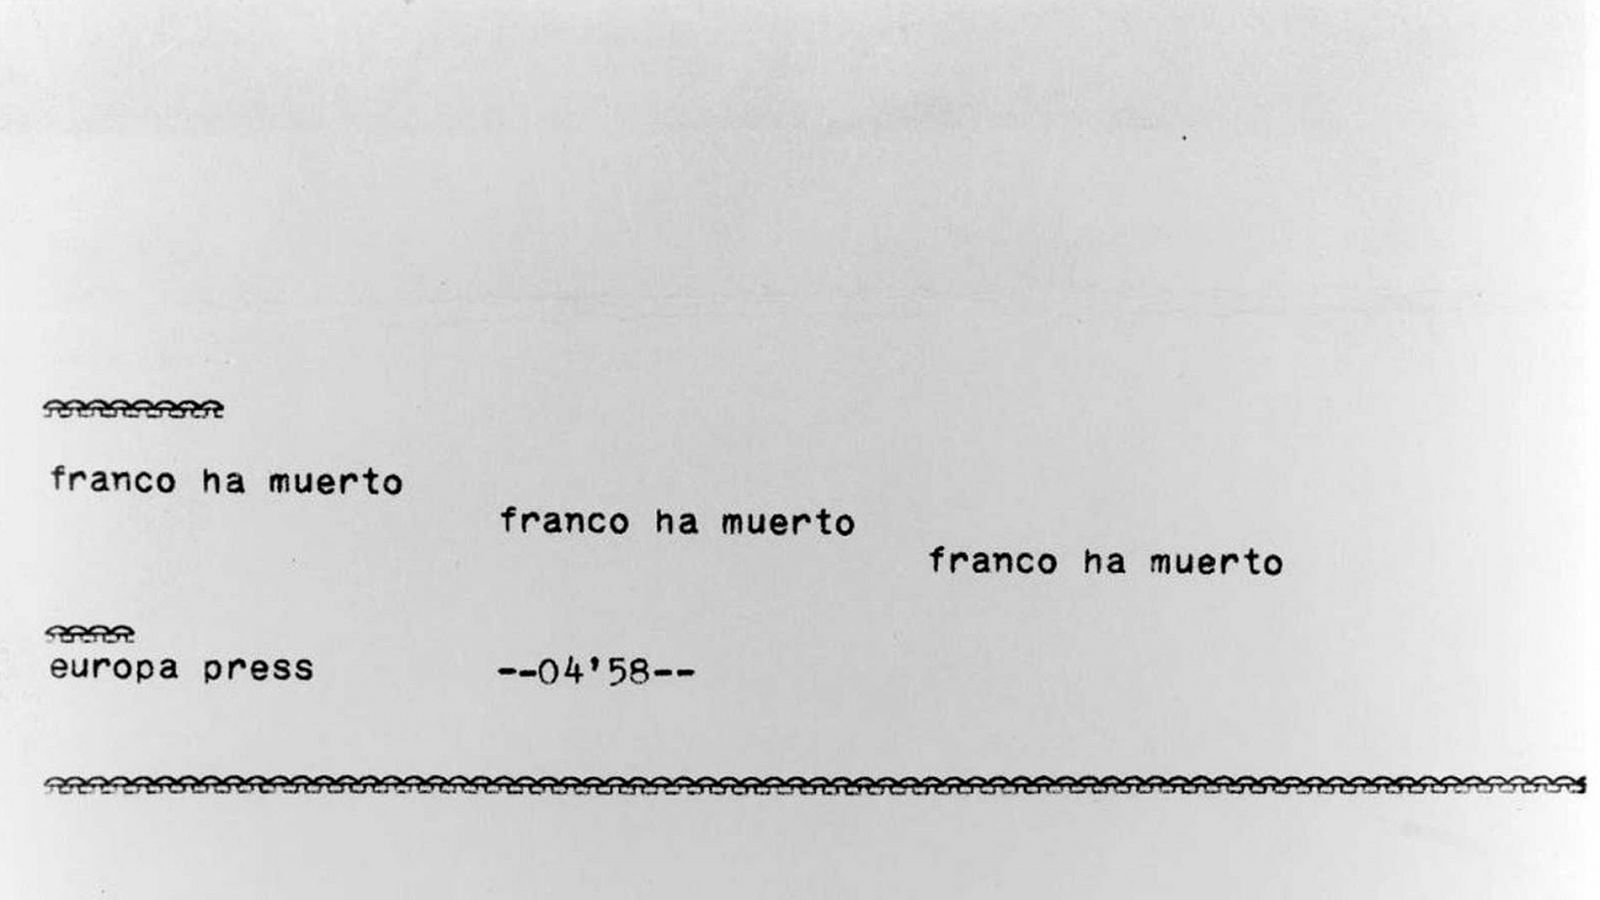 La primicia de la muerte de Franco